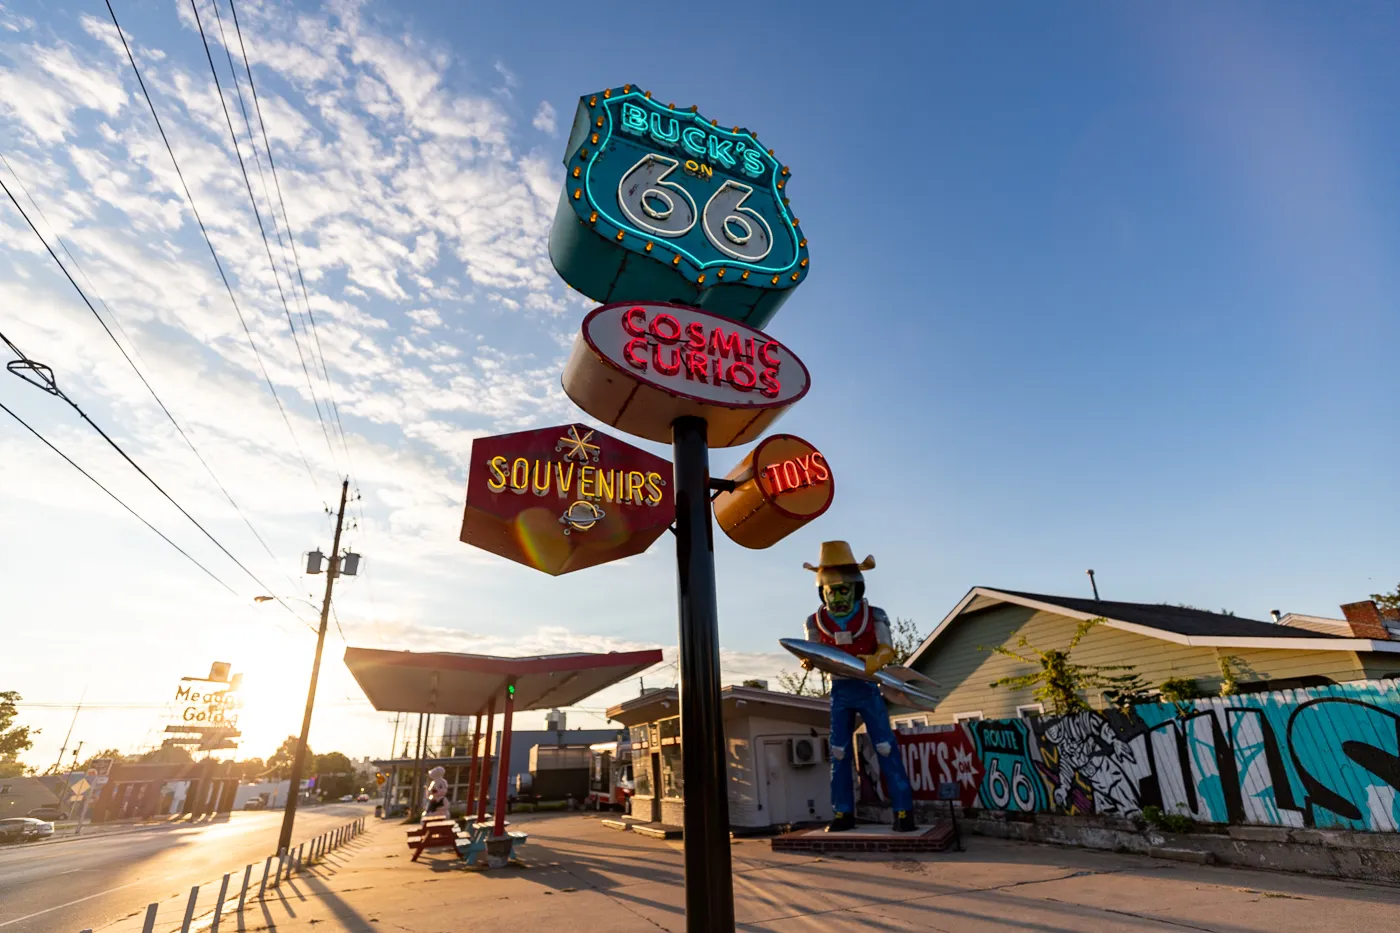 Buck Atom's Cosmic Curios on Route 66 in Tulsa, Oklahoma